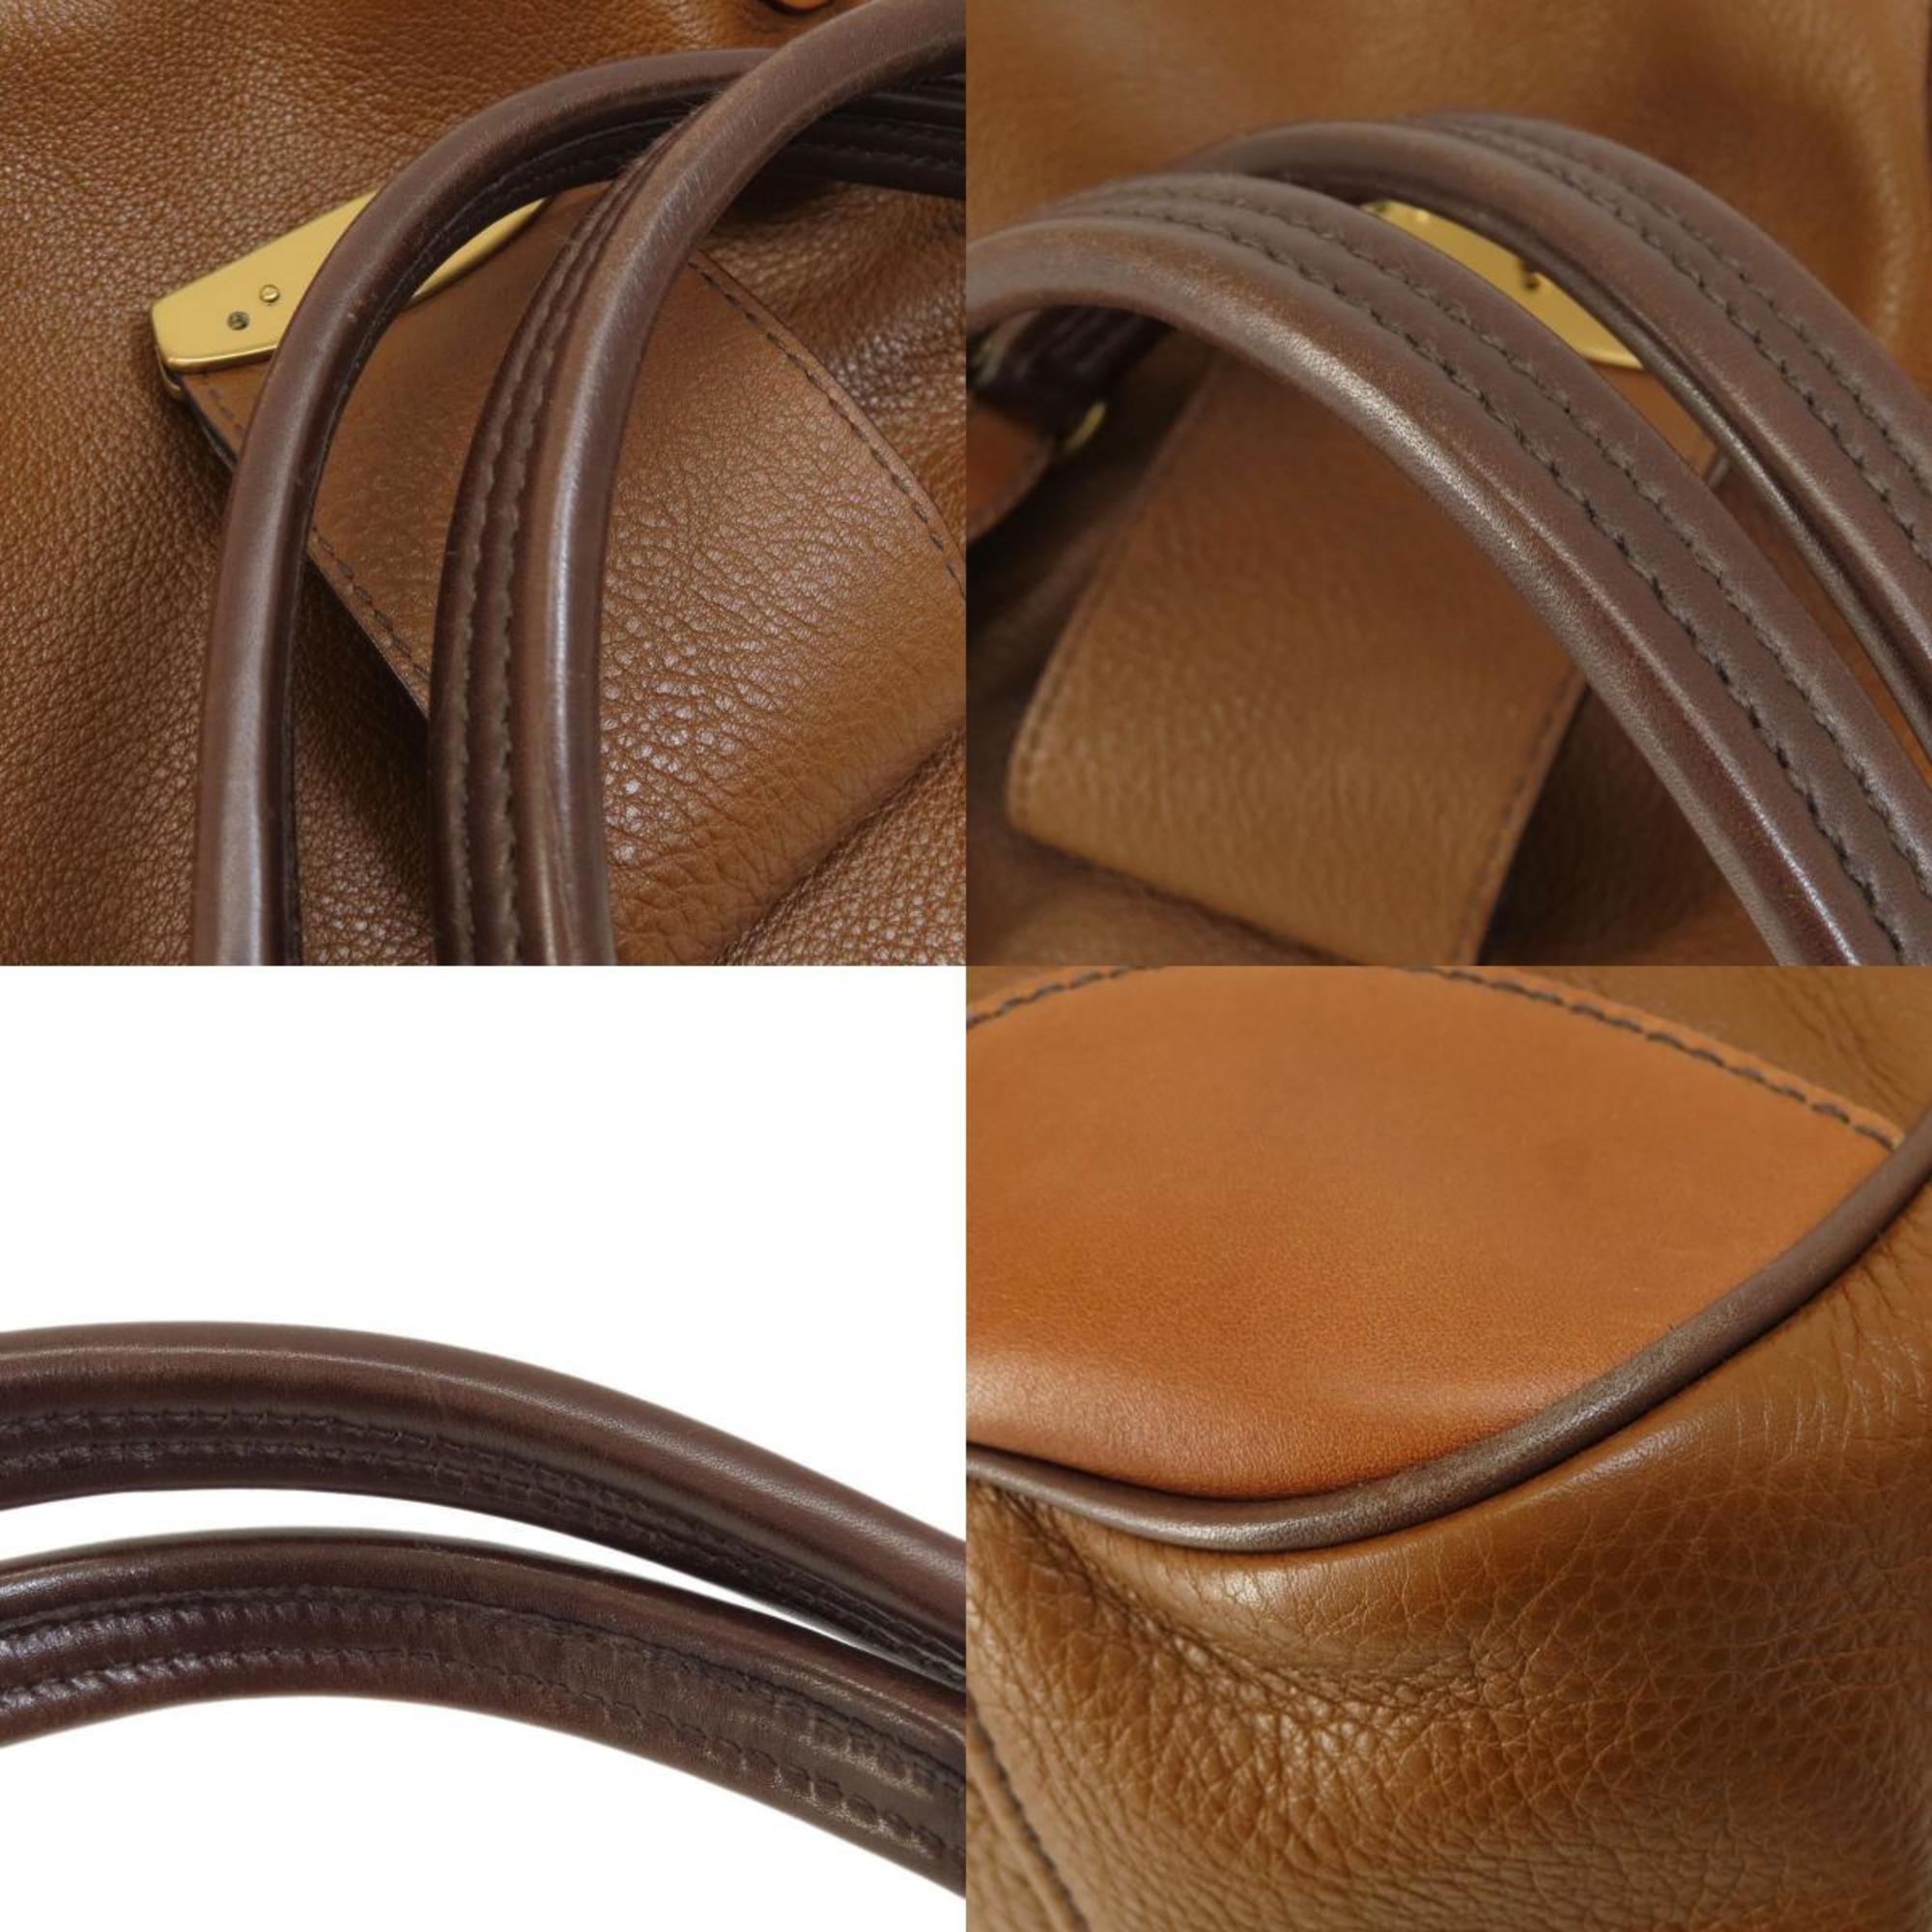 Prada BR2672 VIT DAINO ROCKE handbag leather for women